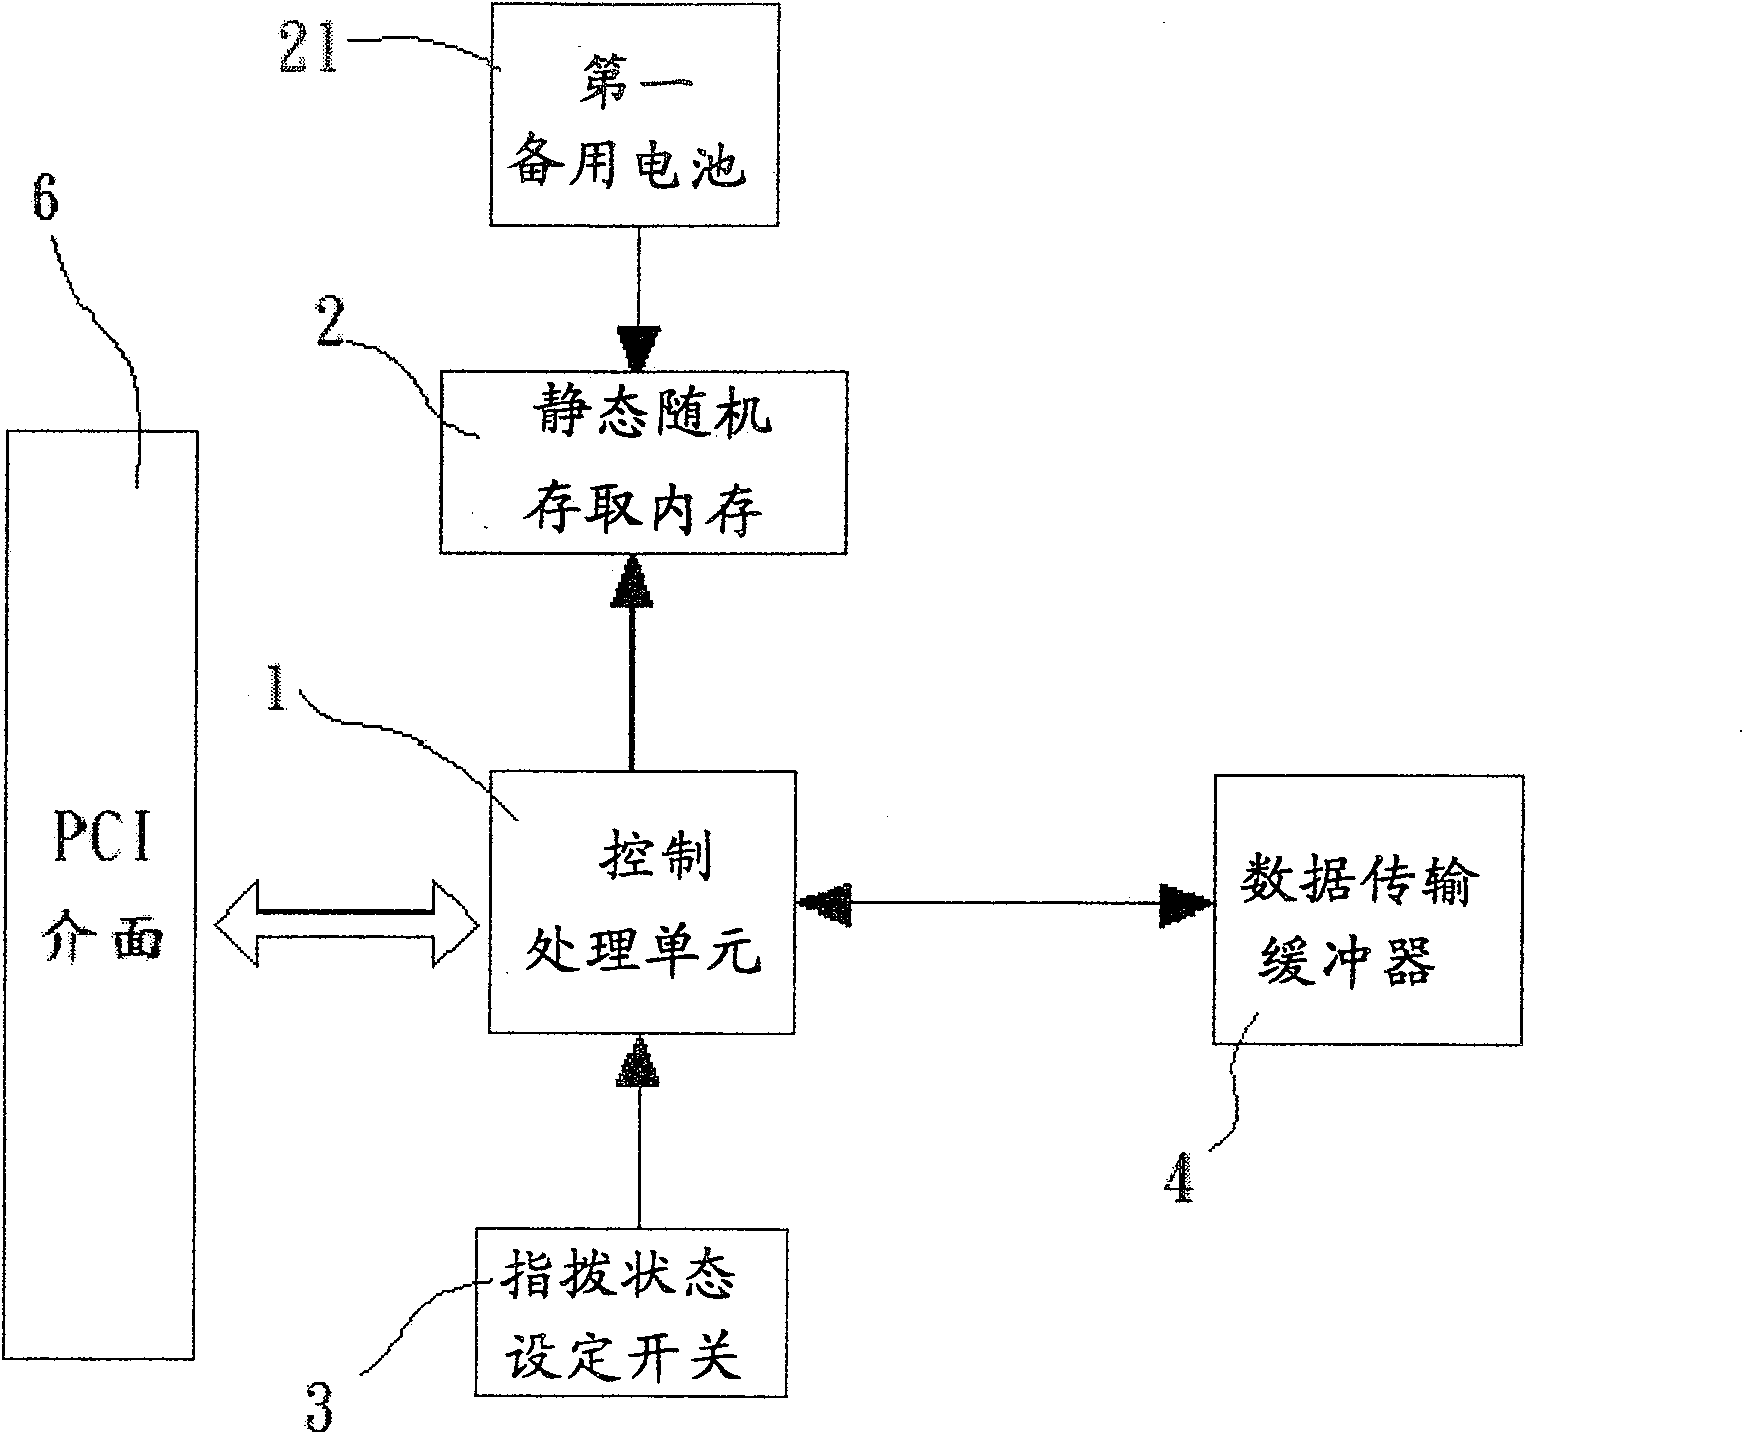 Multi-point universal transmission control interface arrangement